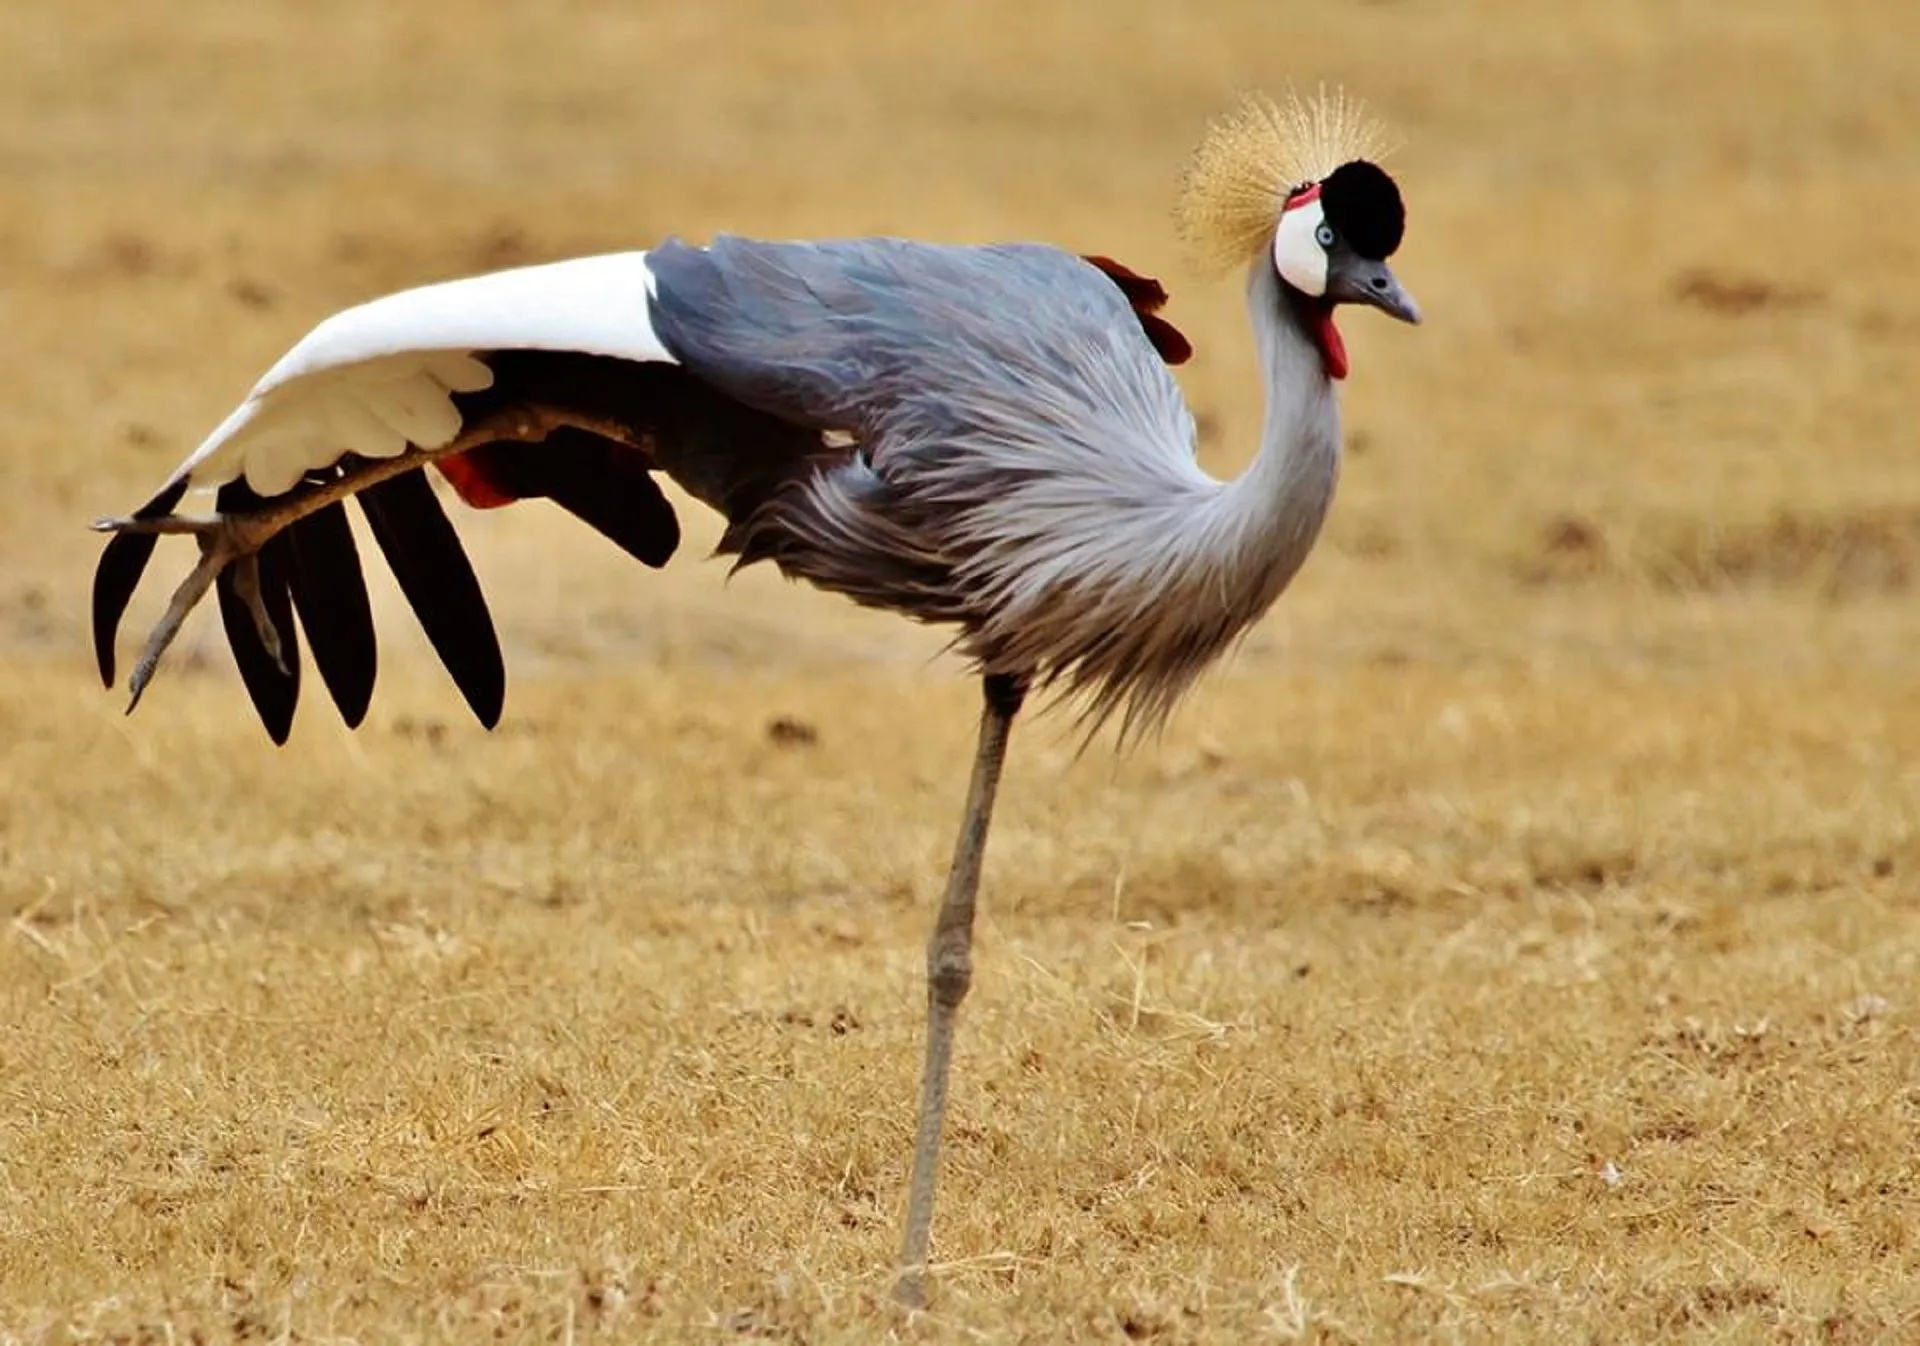 kenya tanzania travel - uganda crane